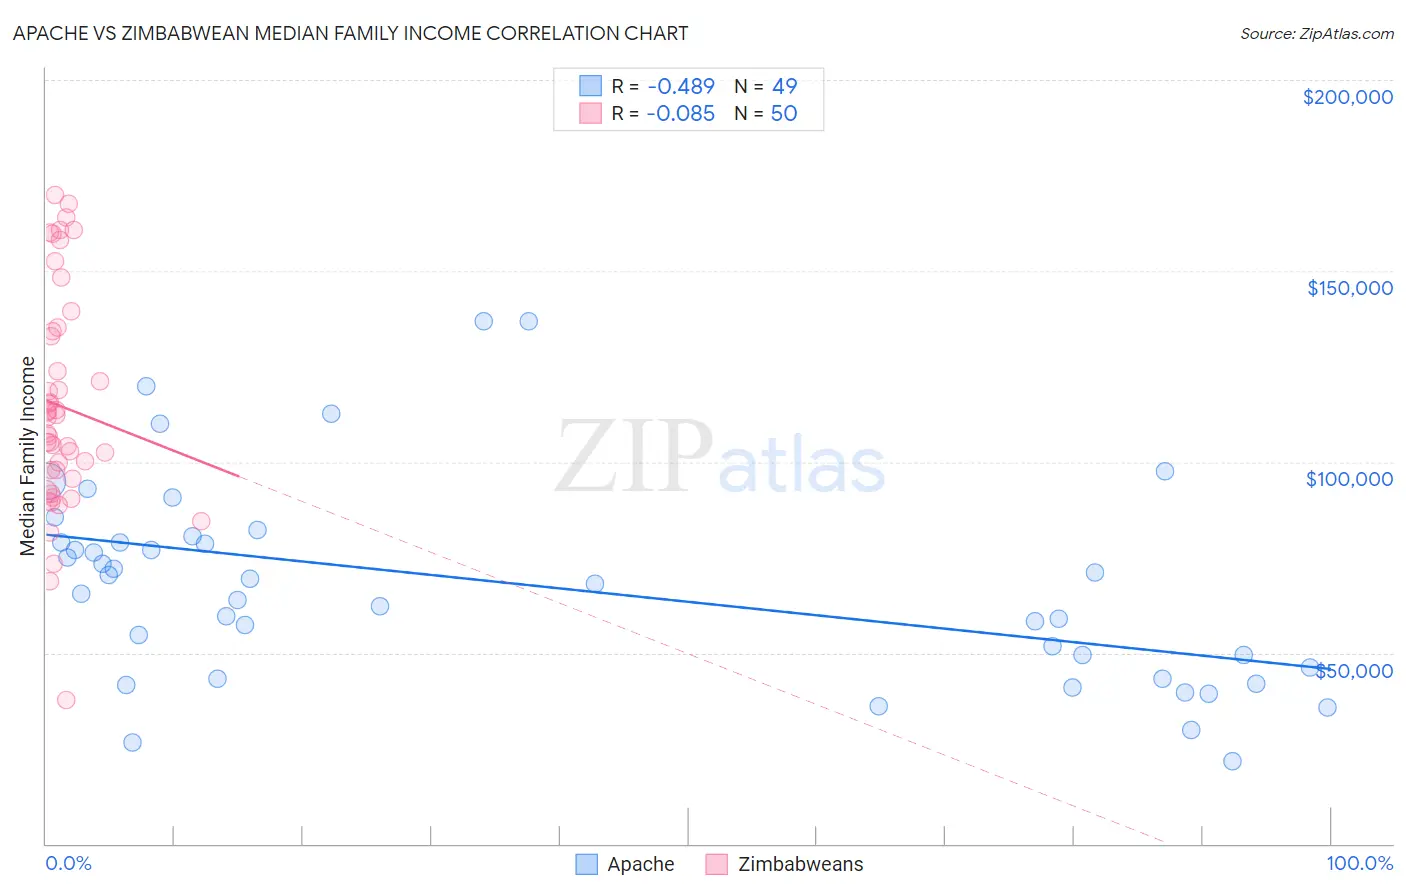 Apache vs Zimbabwean Median Family Income